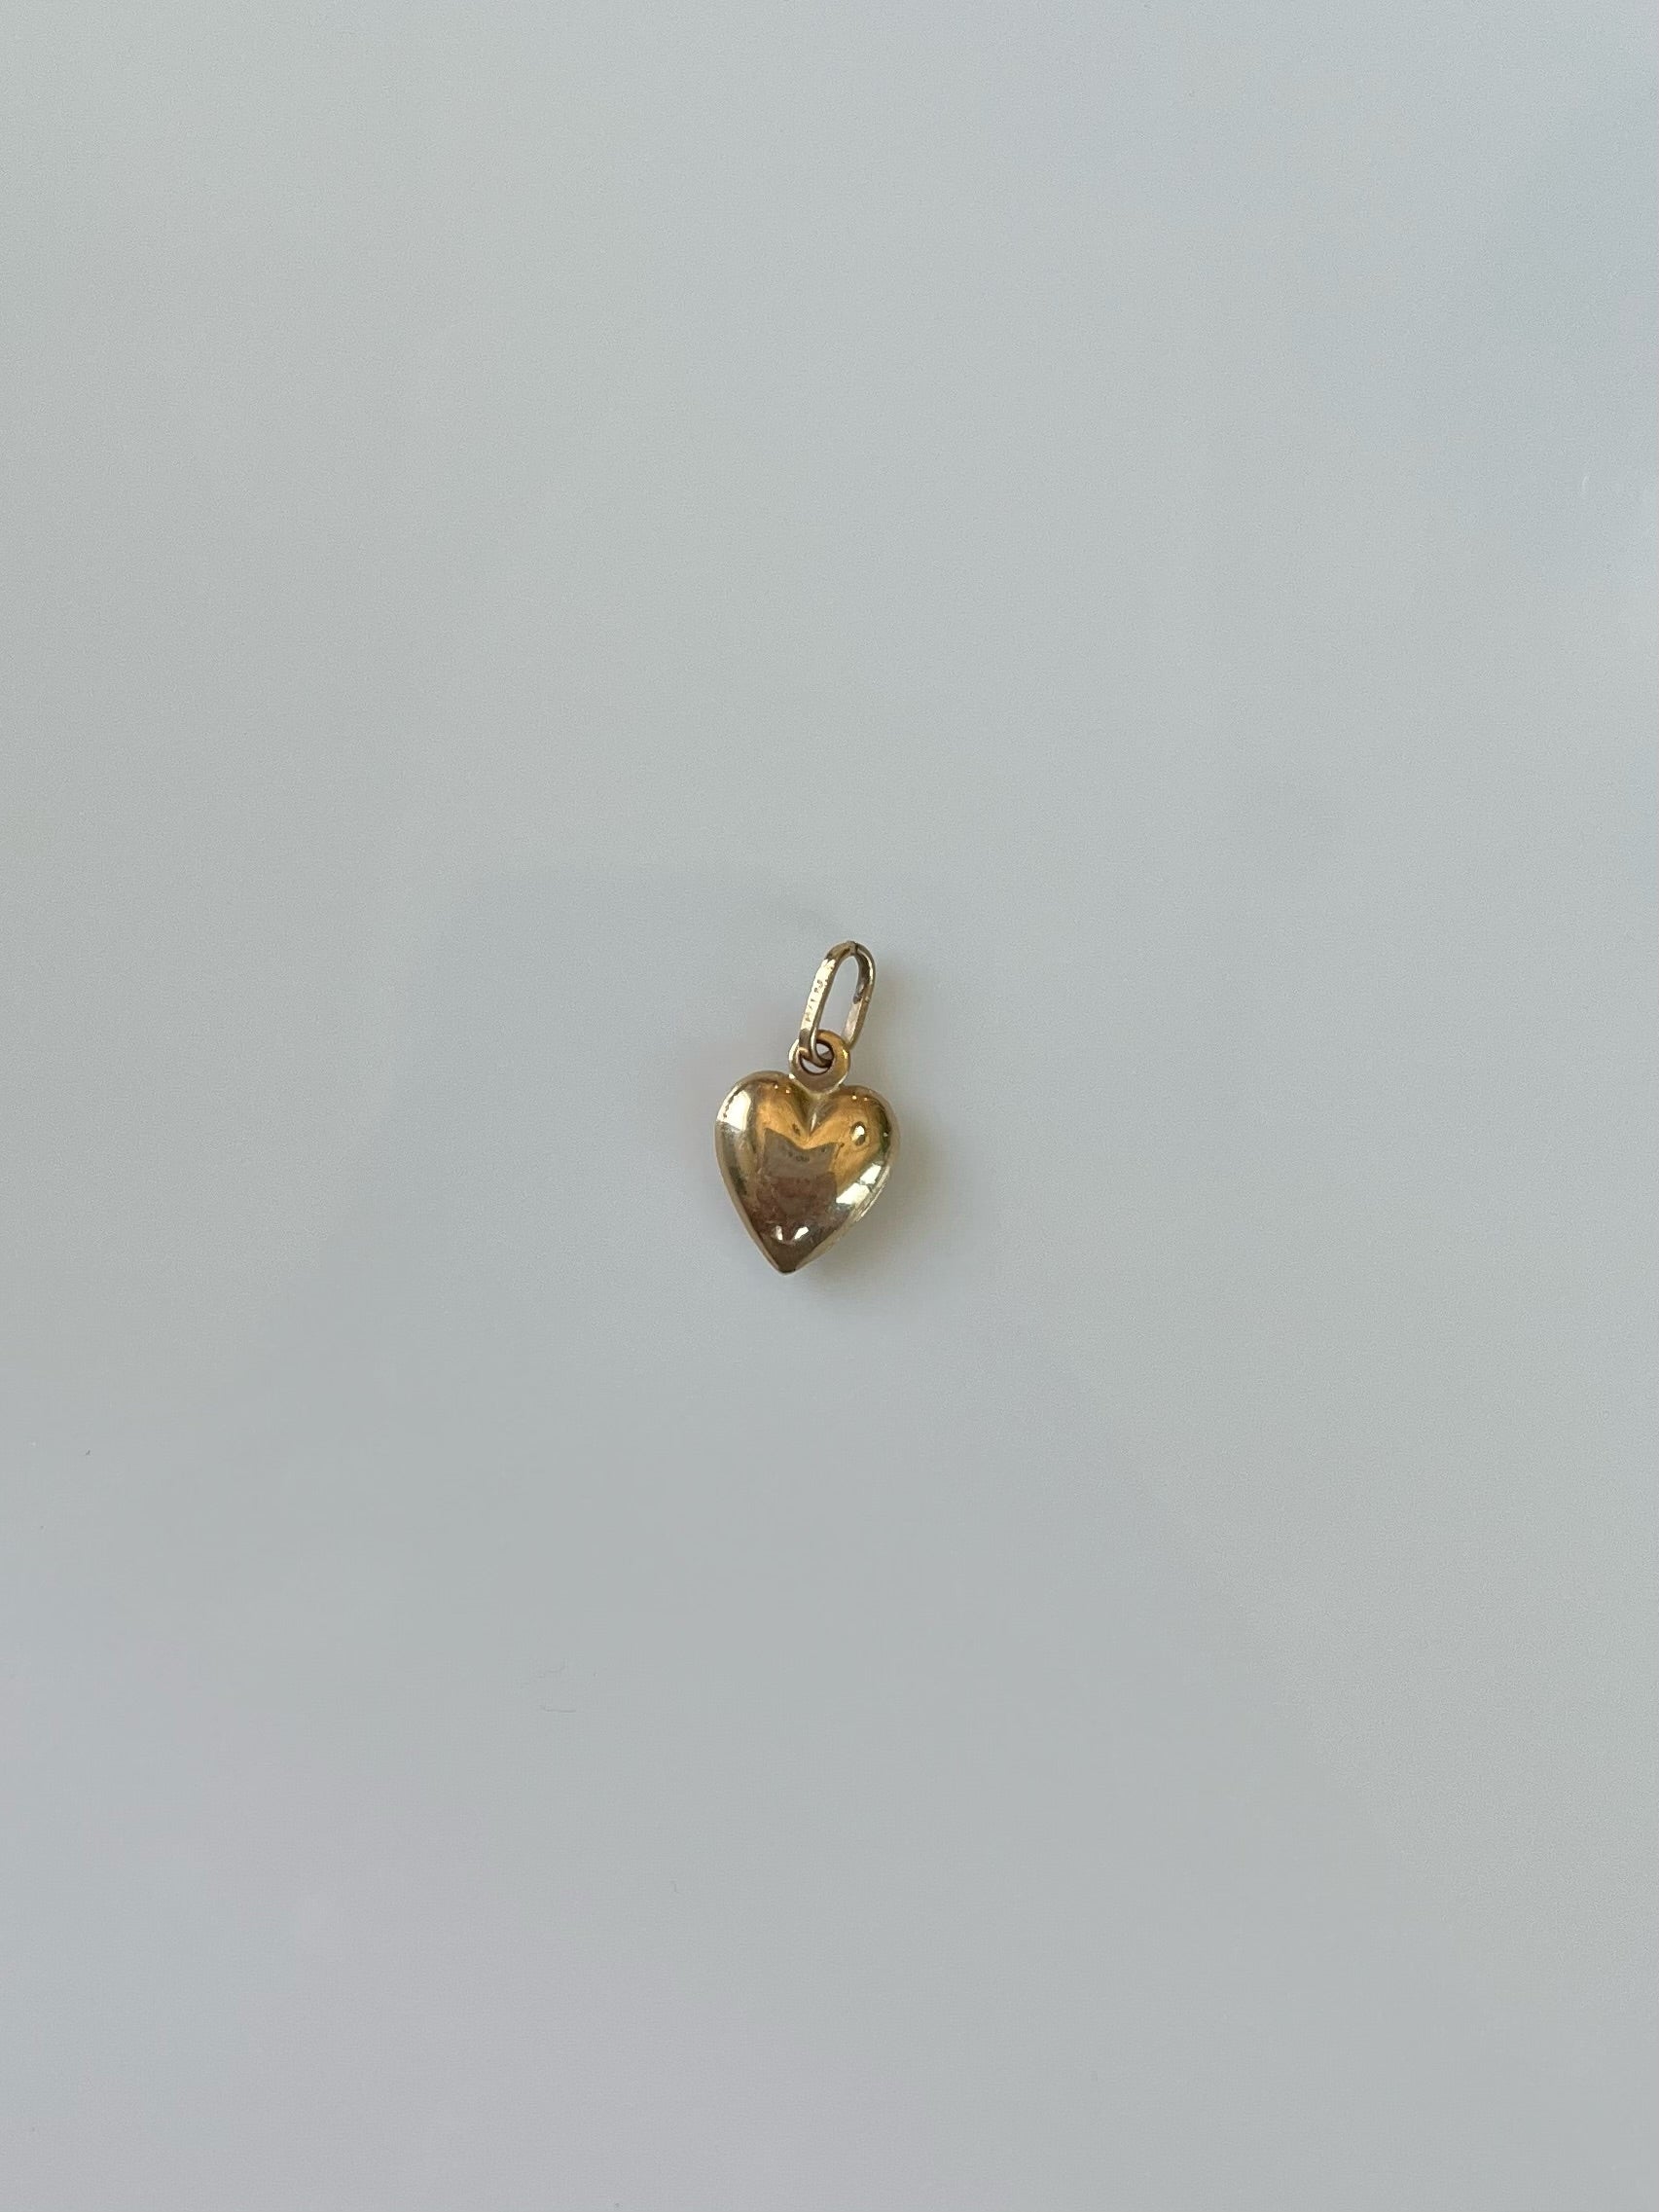 Vintage 18k Gold Heart Charm